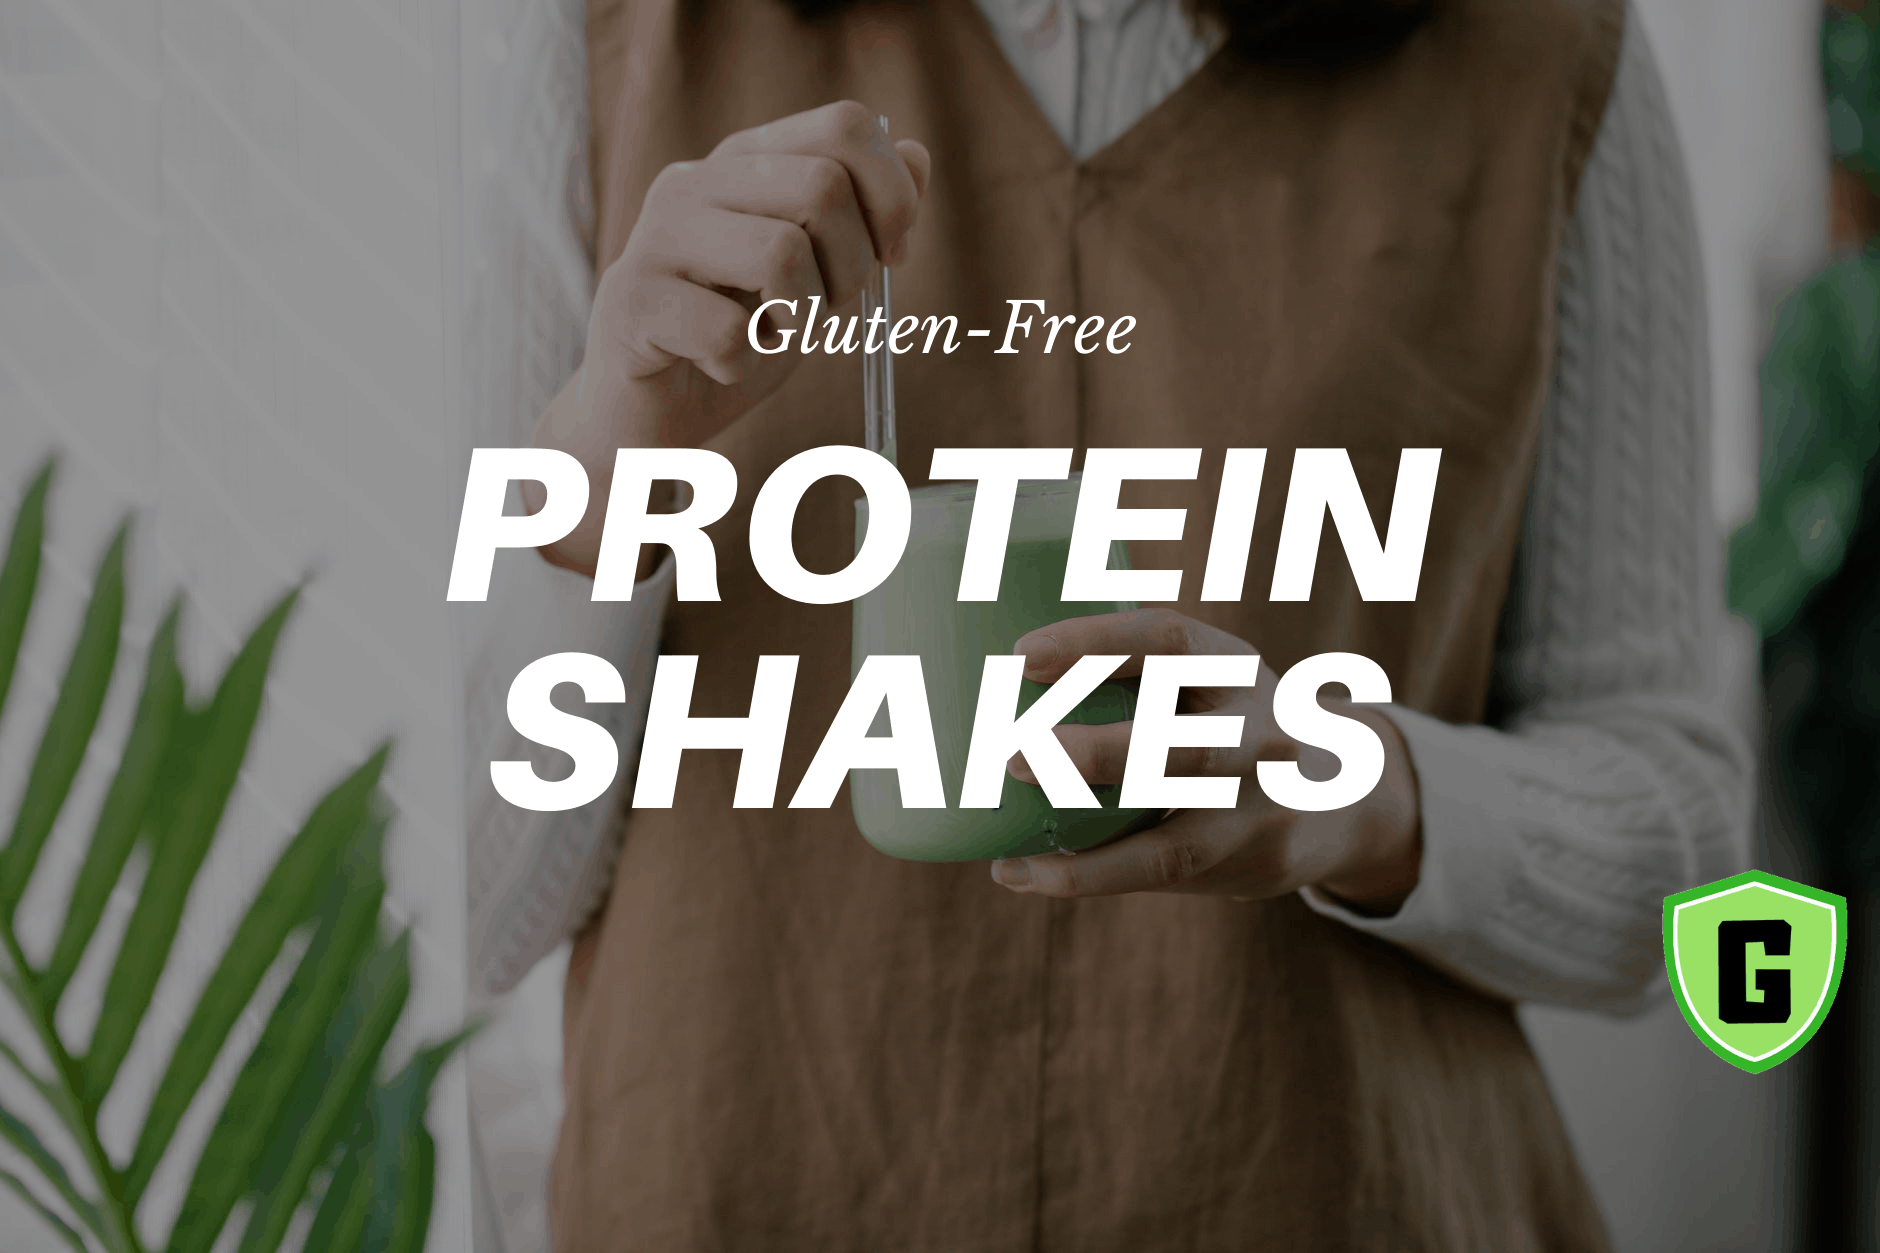 Gluten free protein shakes